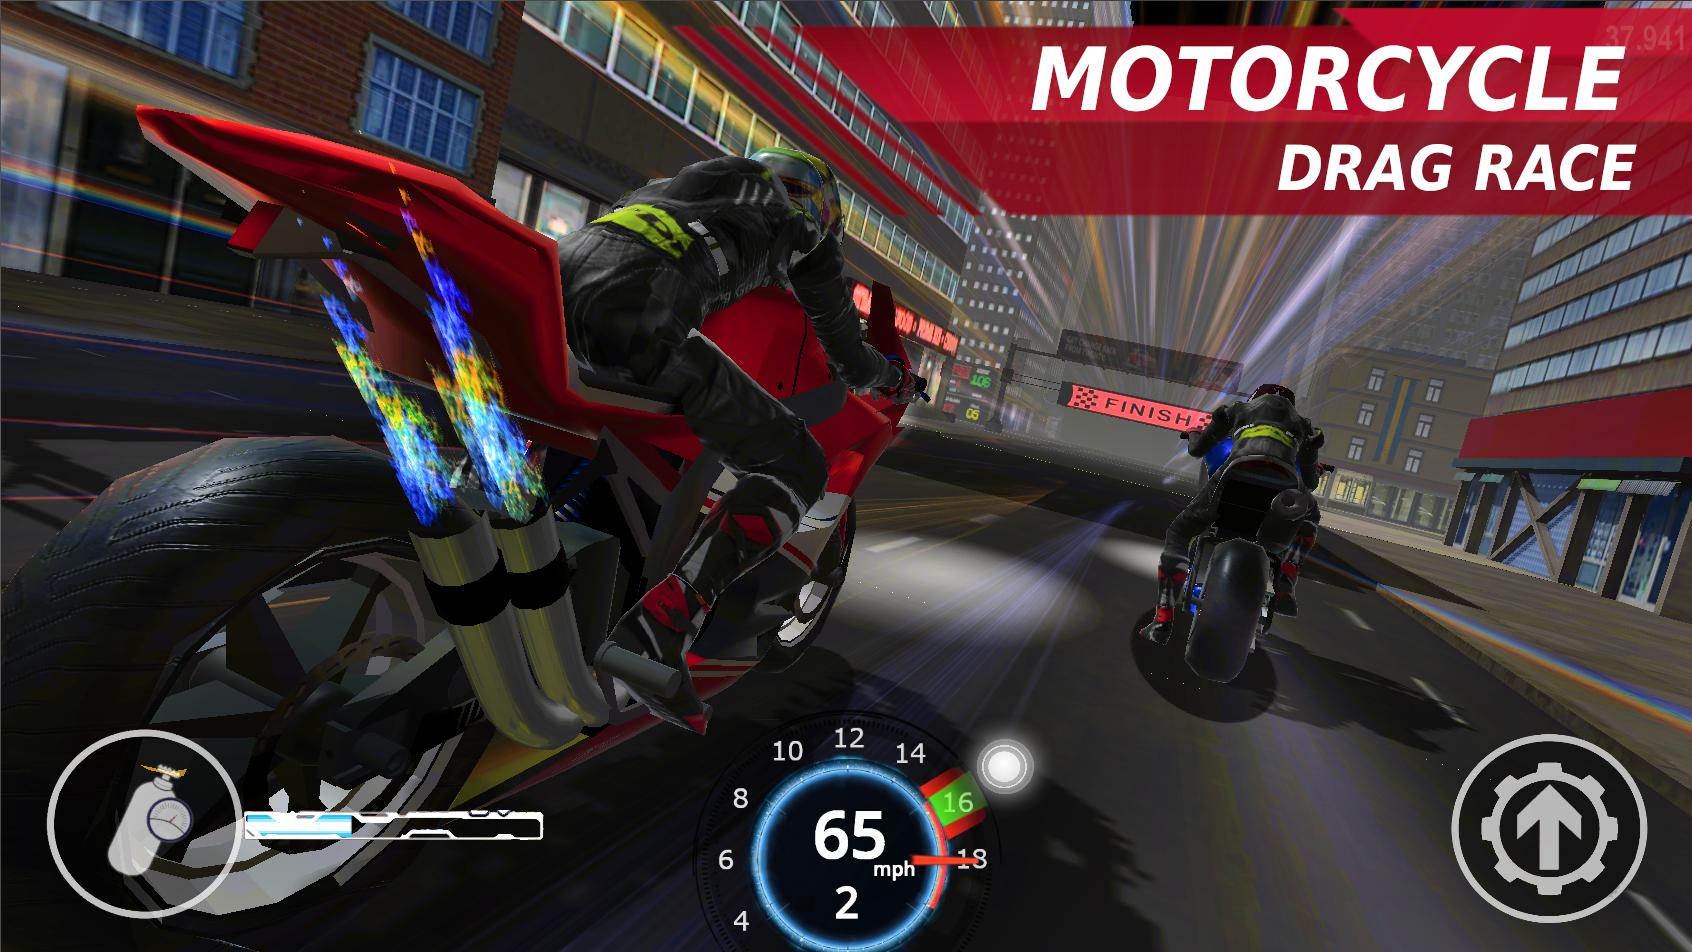 Rebel Gears Drag Bike Racing / CSR Race Moto Game 1.3.2 Screenshot 10